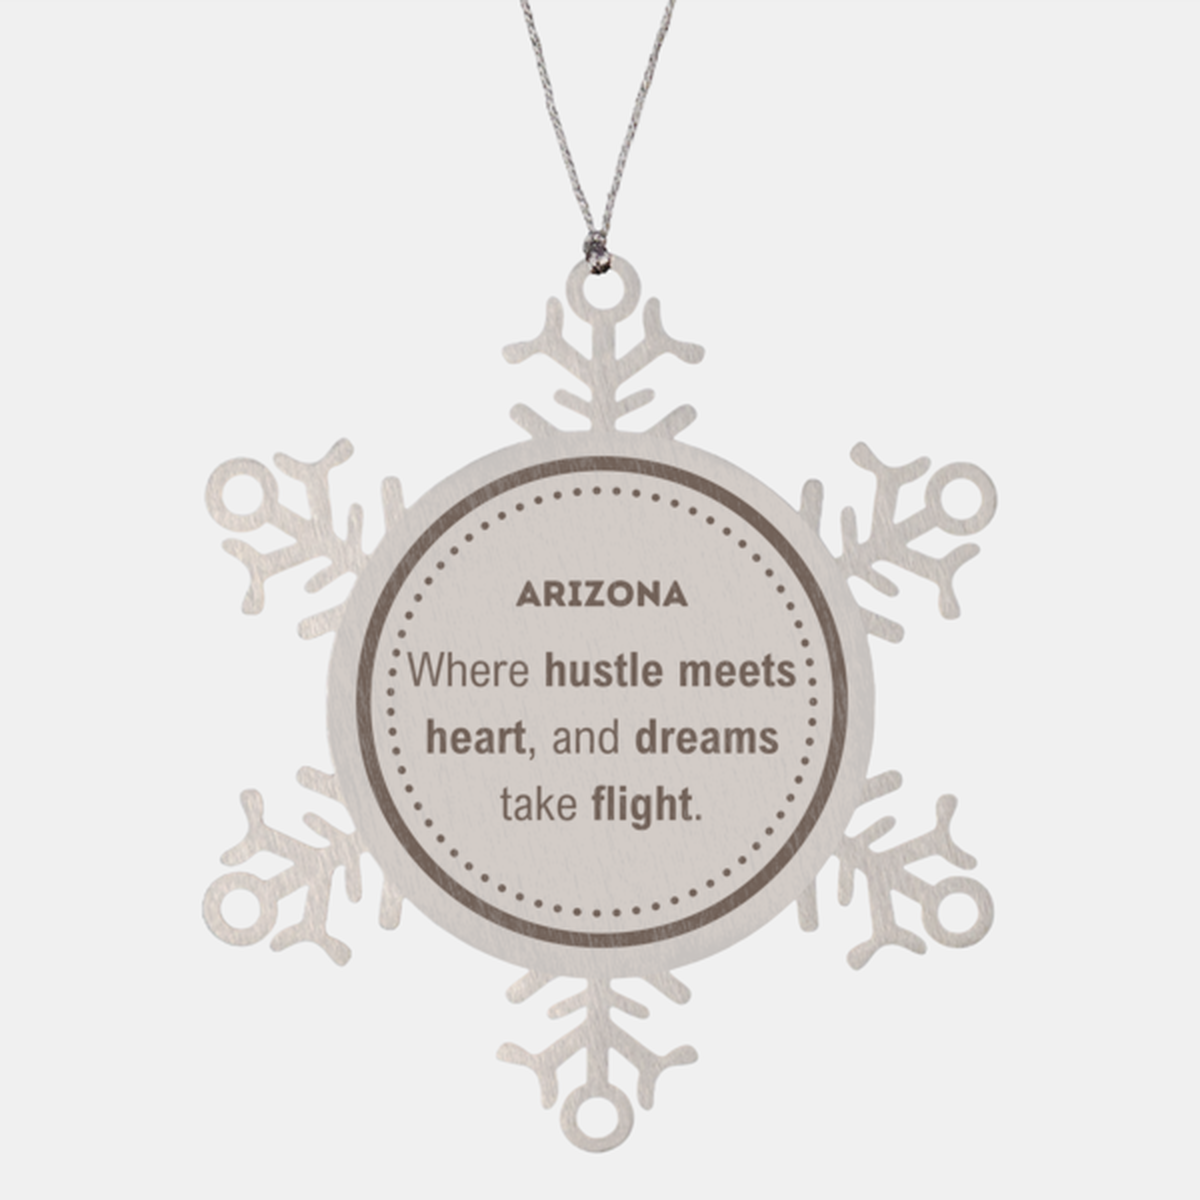 Arizona: Where hustle meets heart, and dreams take flight, Arizona Ornament Gifts, Proud Arizona Christmas Arizona Snowflake Ornament, Arizona State People, Men, Women, Friends